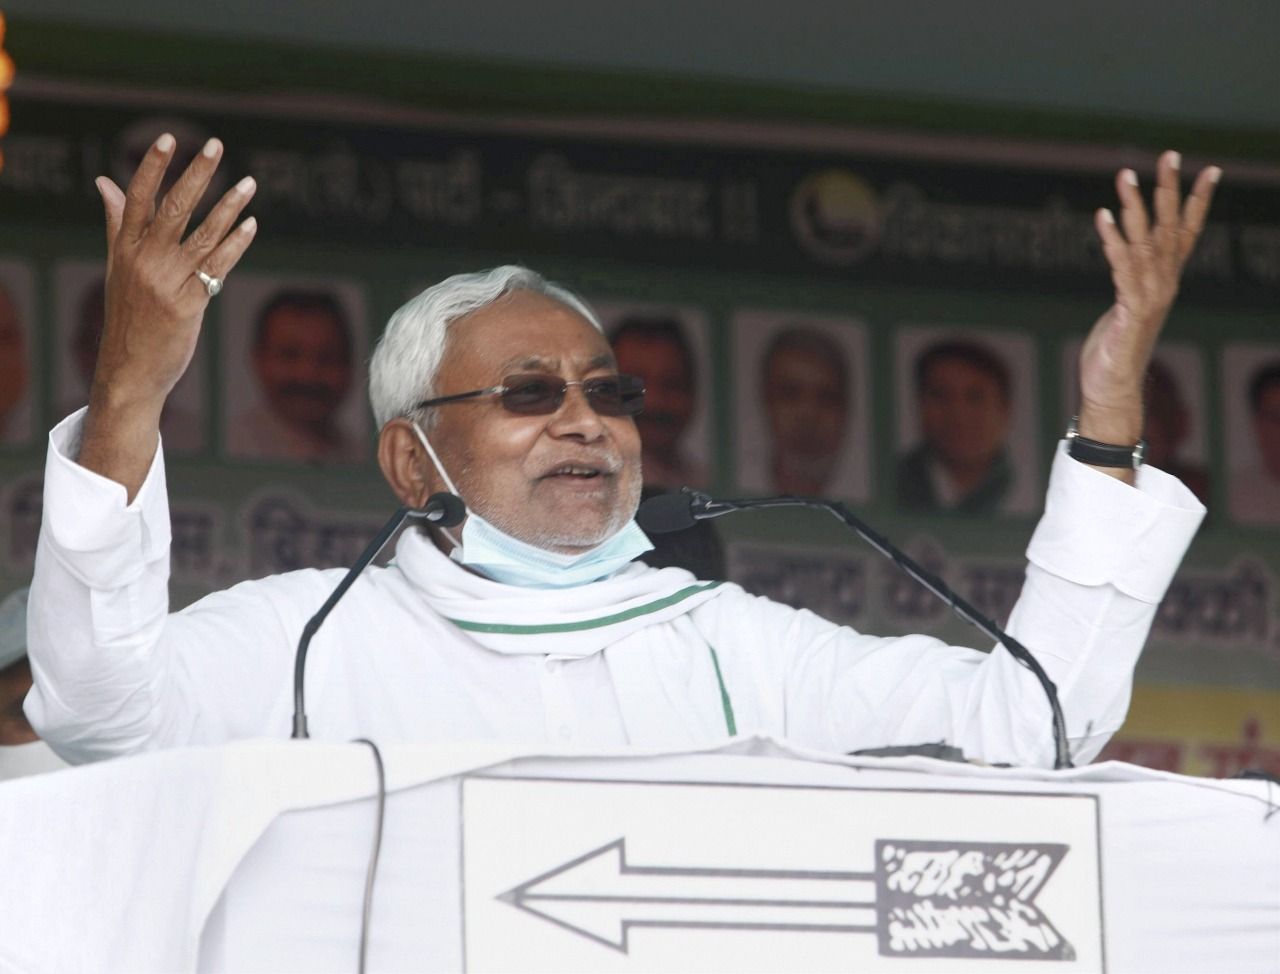 Bihar%20elections%3A%20The%20nine%20lives%20of%20%20Nitish%20Kumar